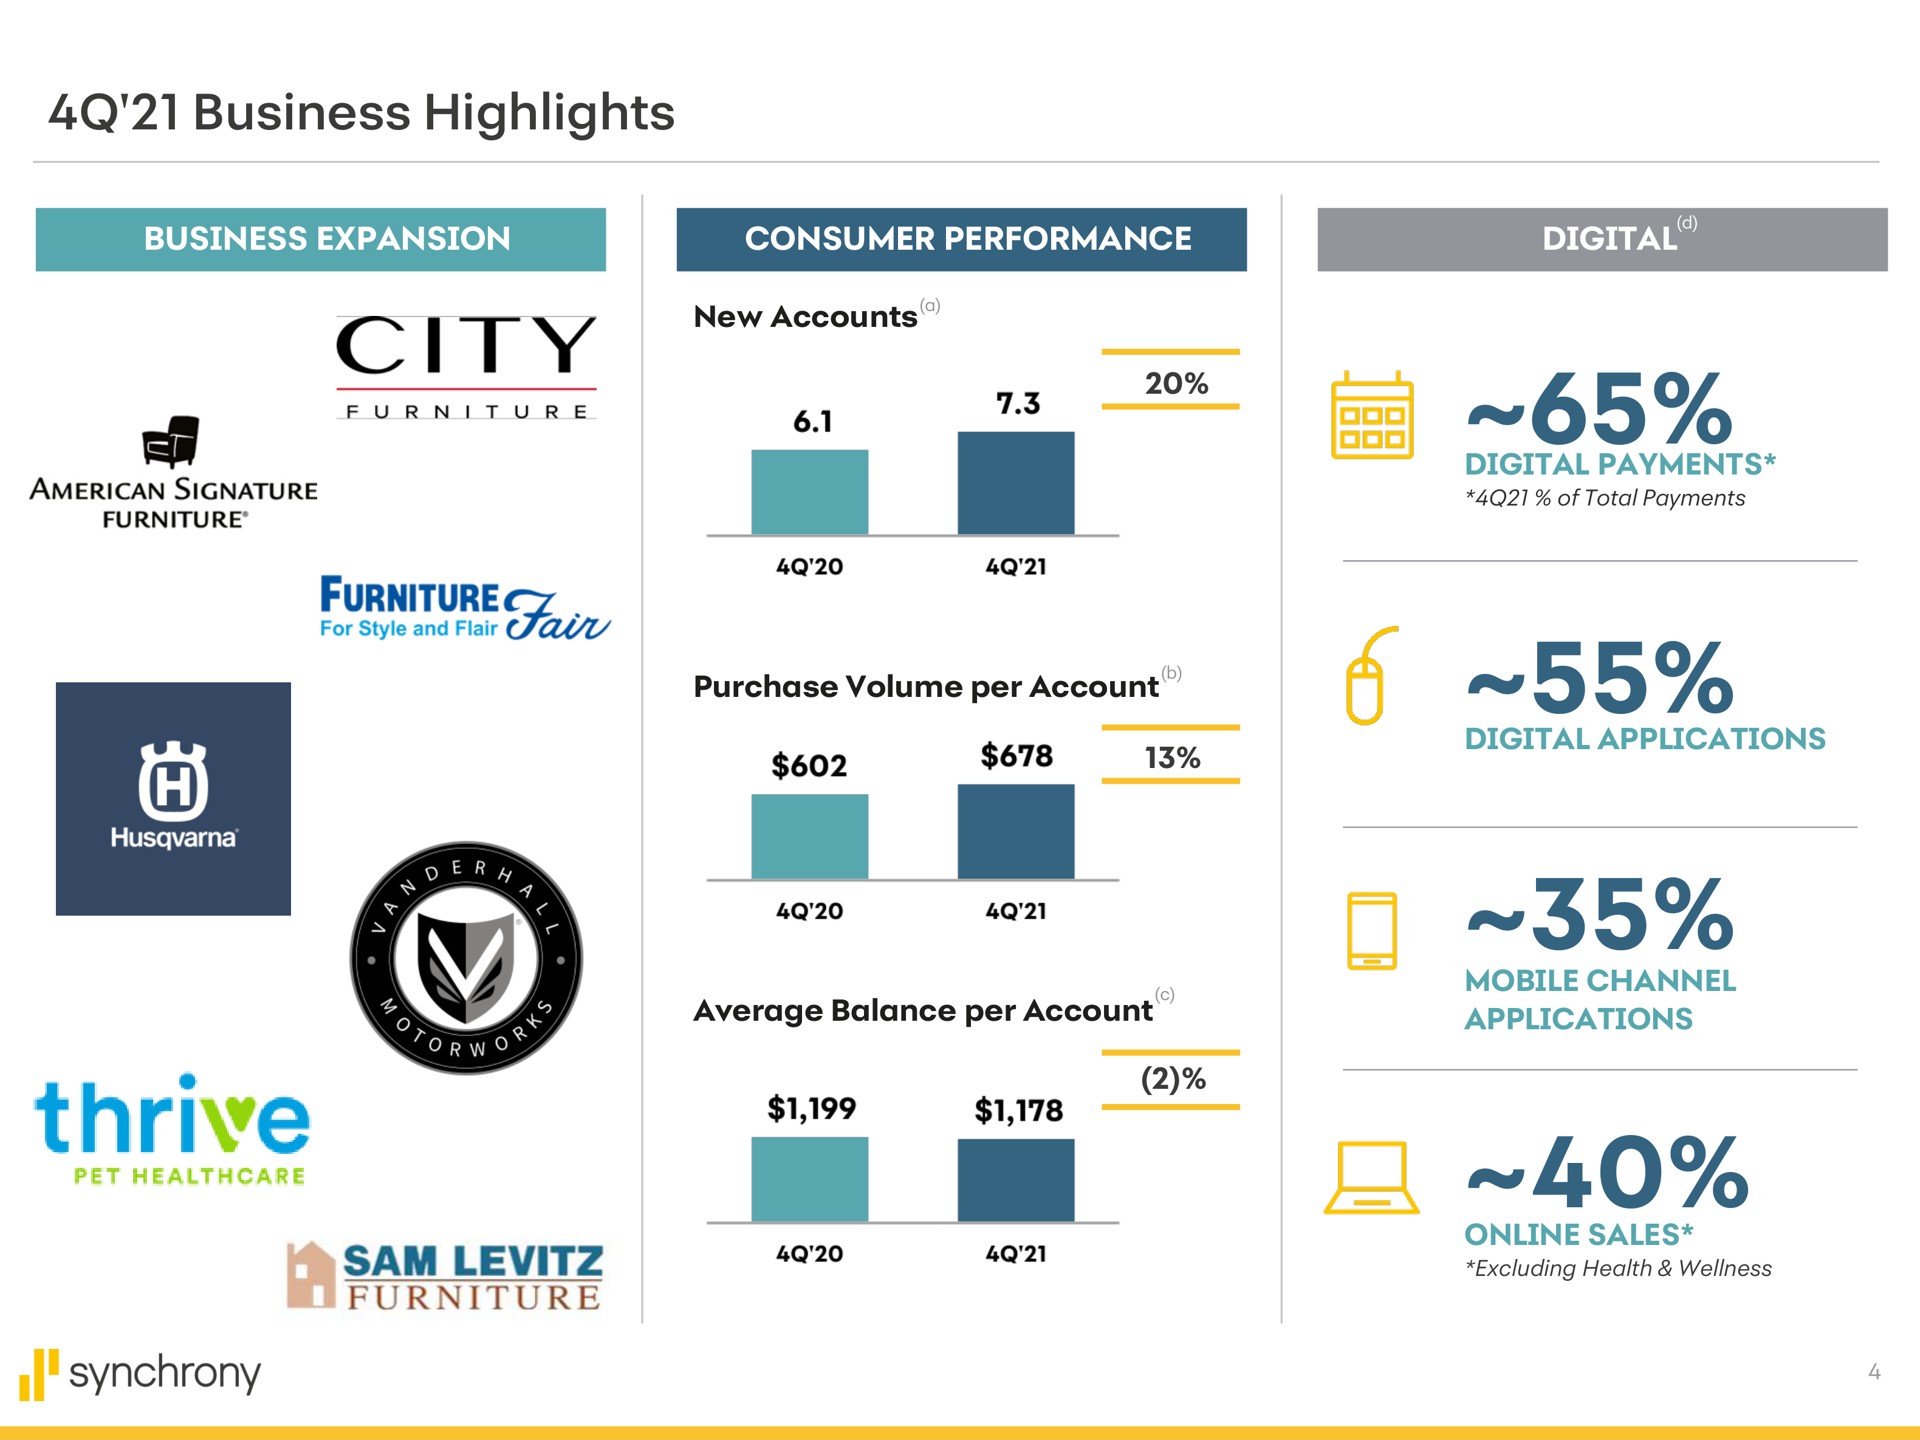 business highlights digital city a thrive sam furniture synchrony | Synchrony Financial